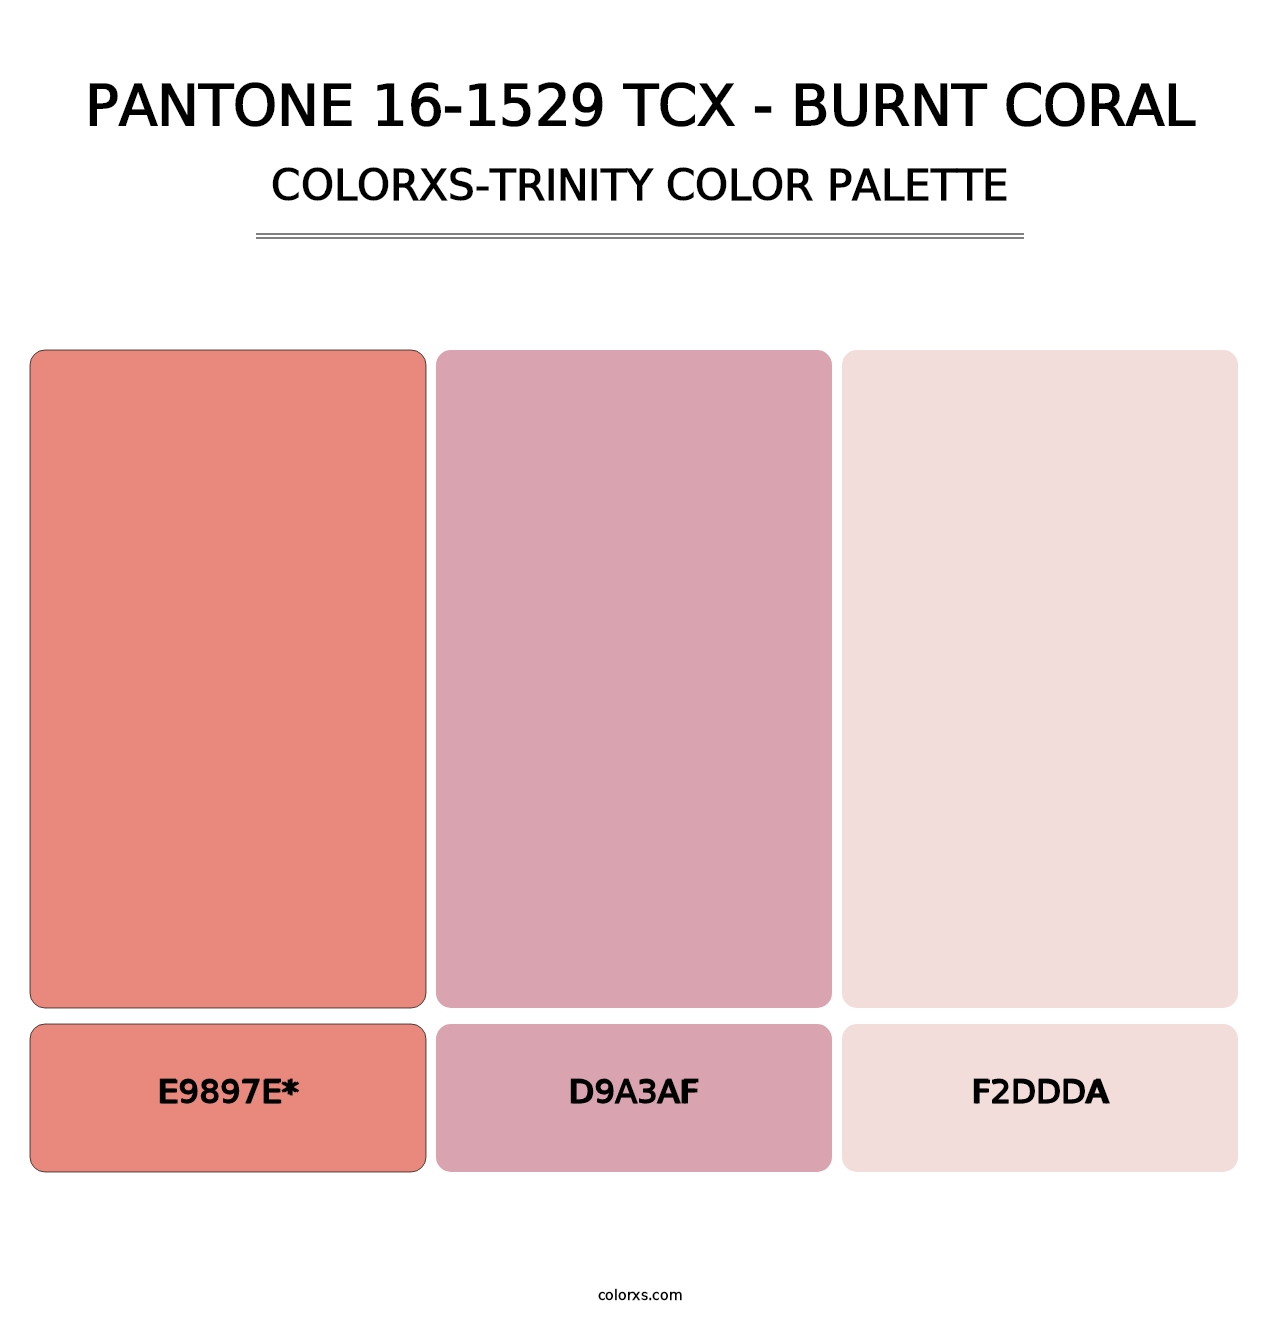 PANTONE 16-1529 TCX - Burnt Coral - Colorxs Trinity Palette